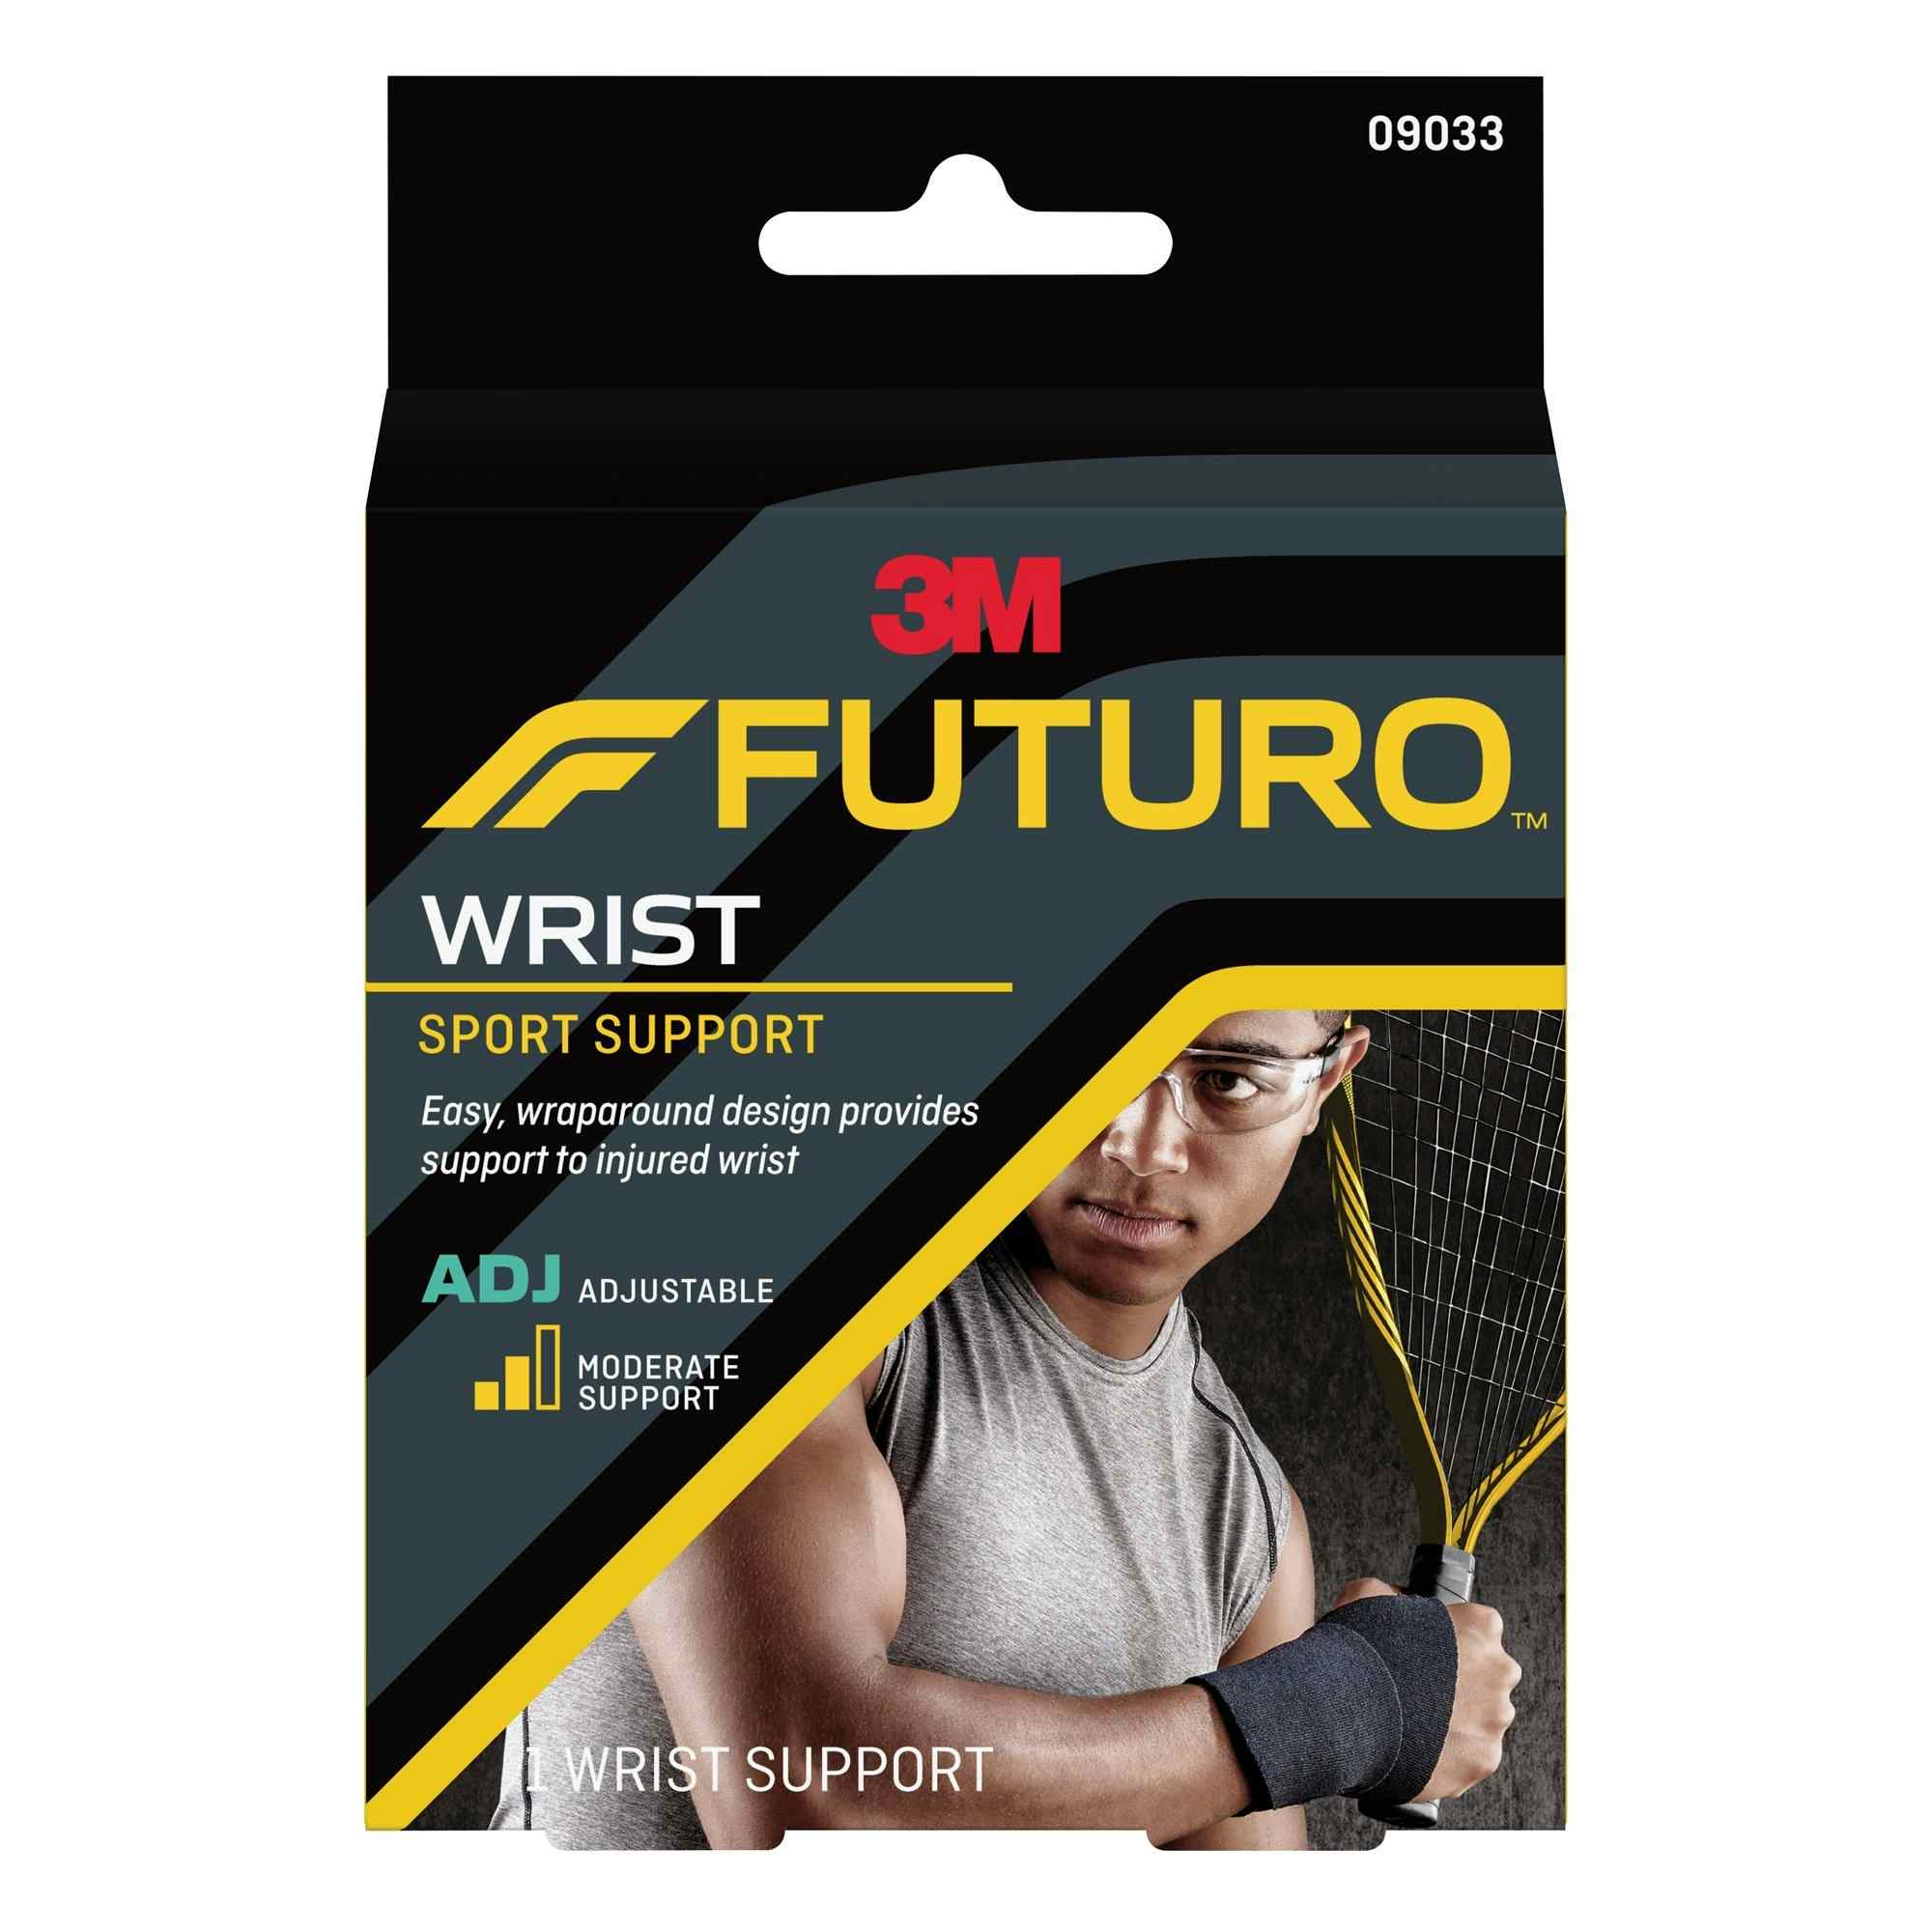 3M Futuro Wrist Sport Support, Moderate Support